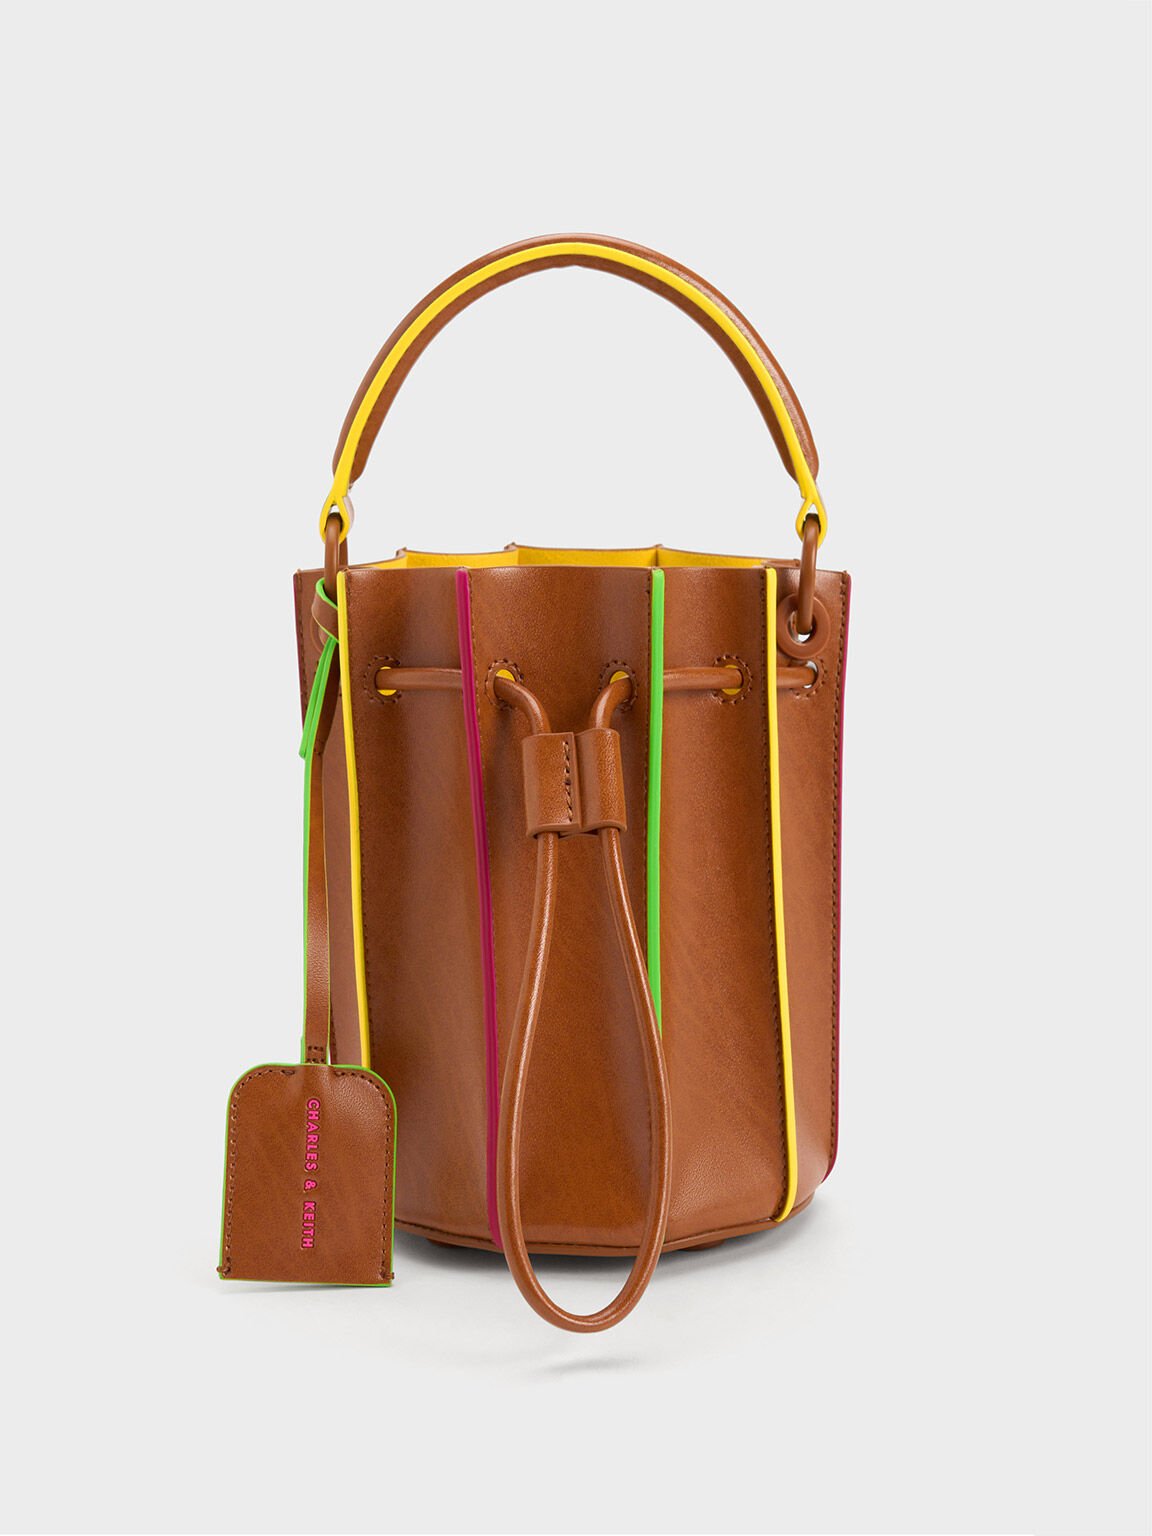 Designer Bucket Bags, Leather Bucket Bags